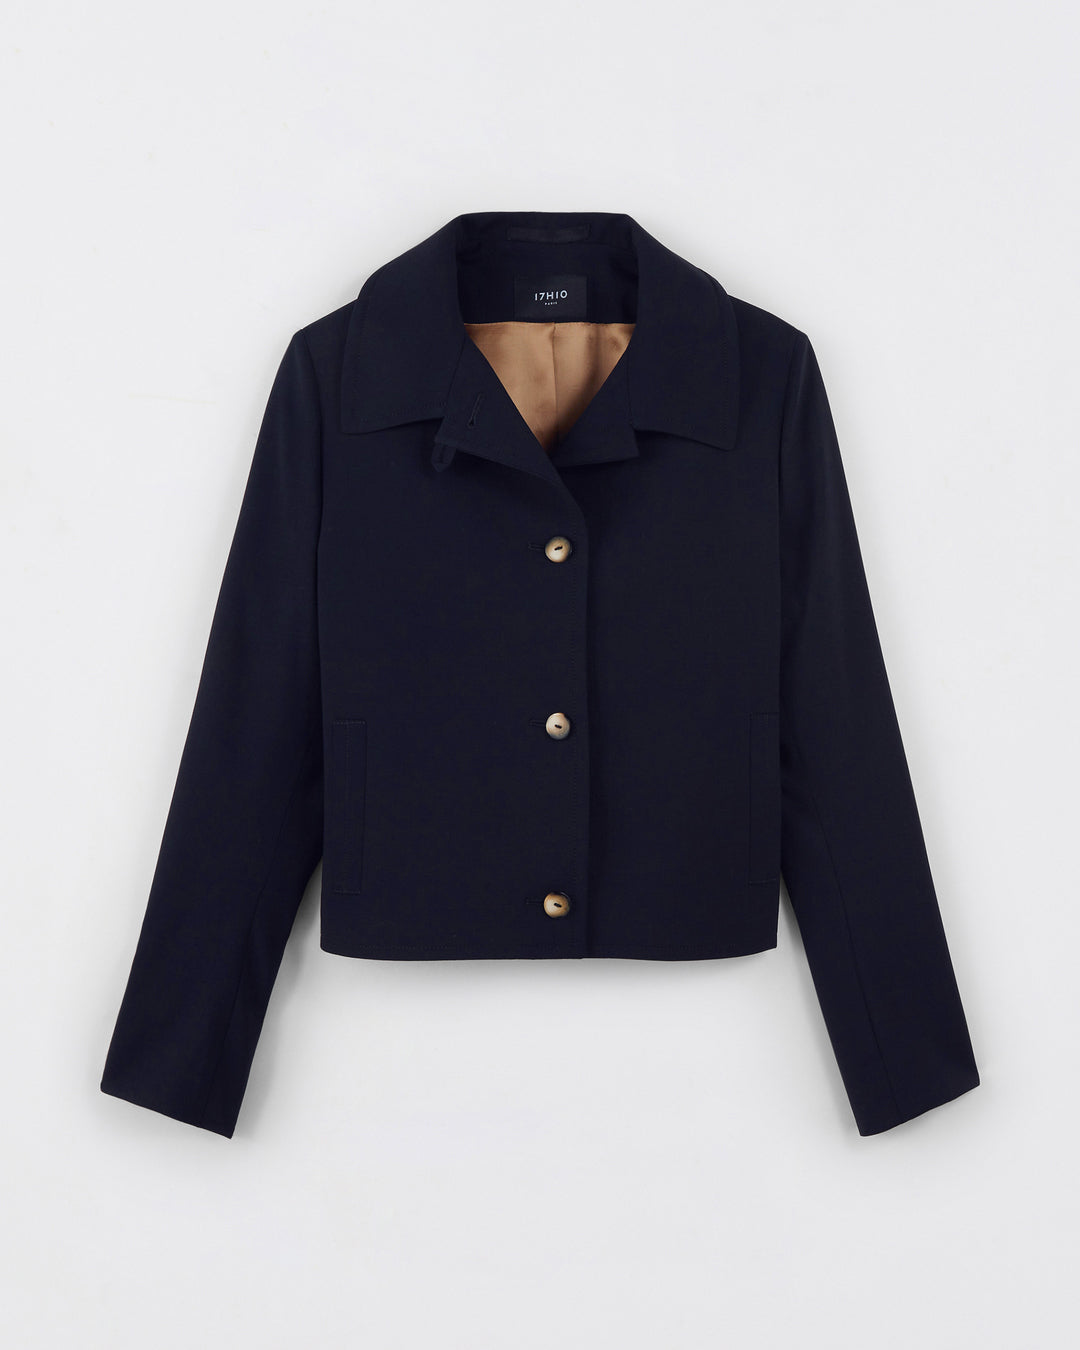 Peking suit jacket - Navy blue